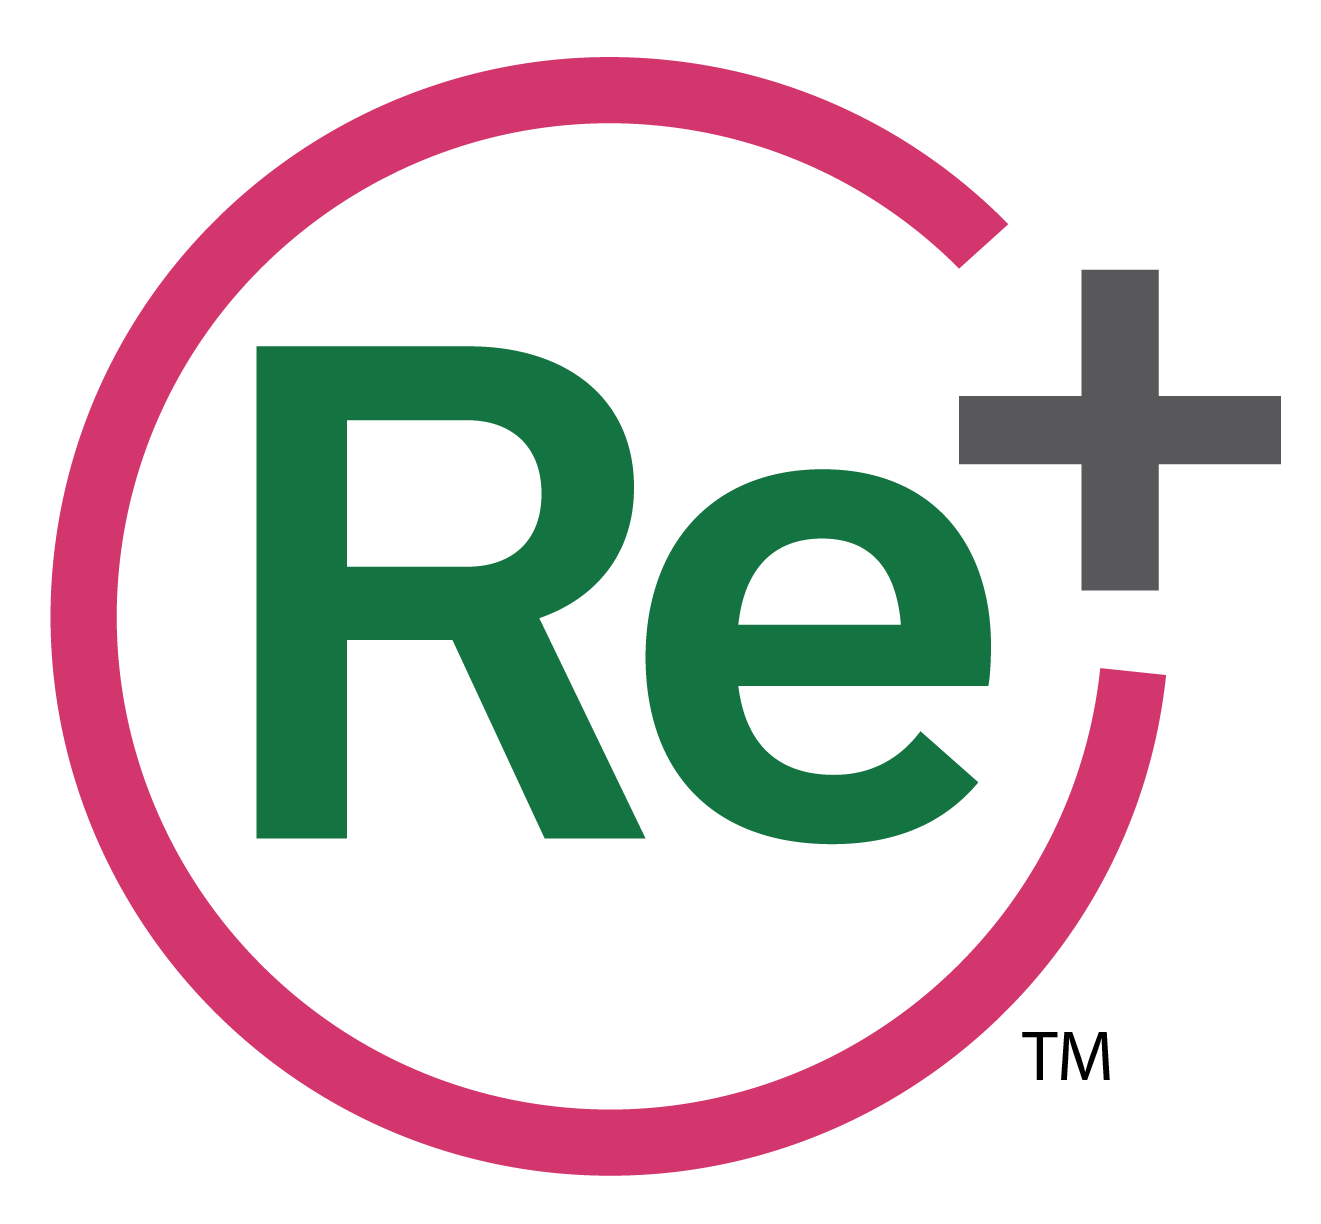 Re+ (zero waste) program logo